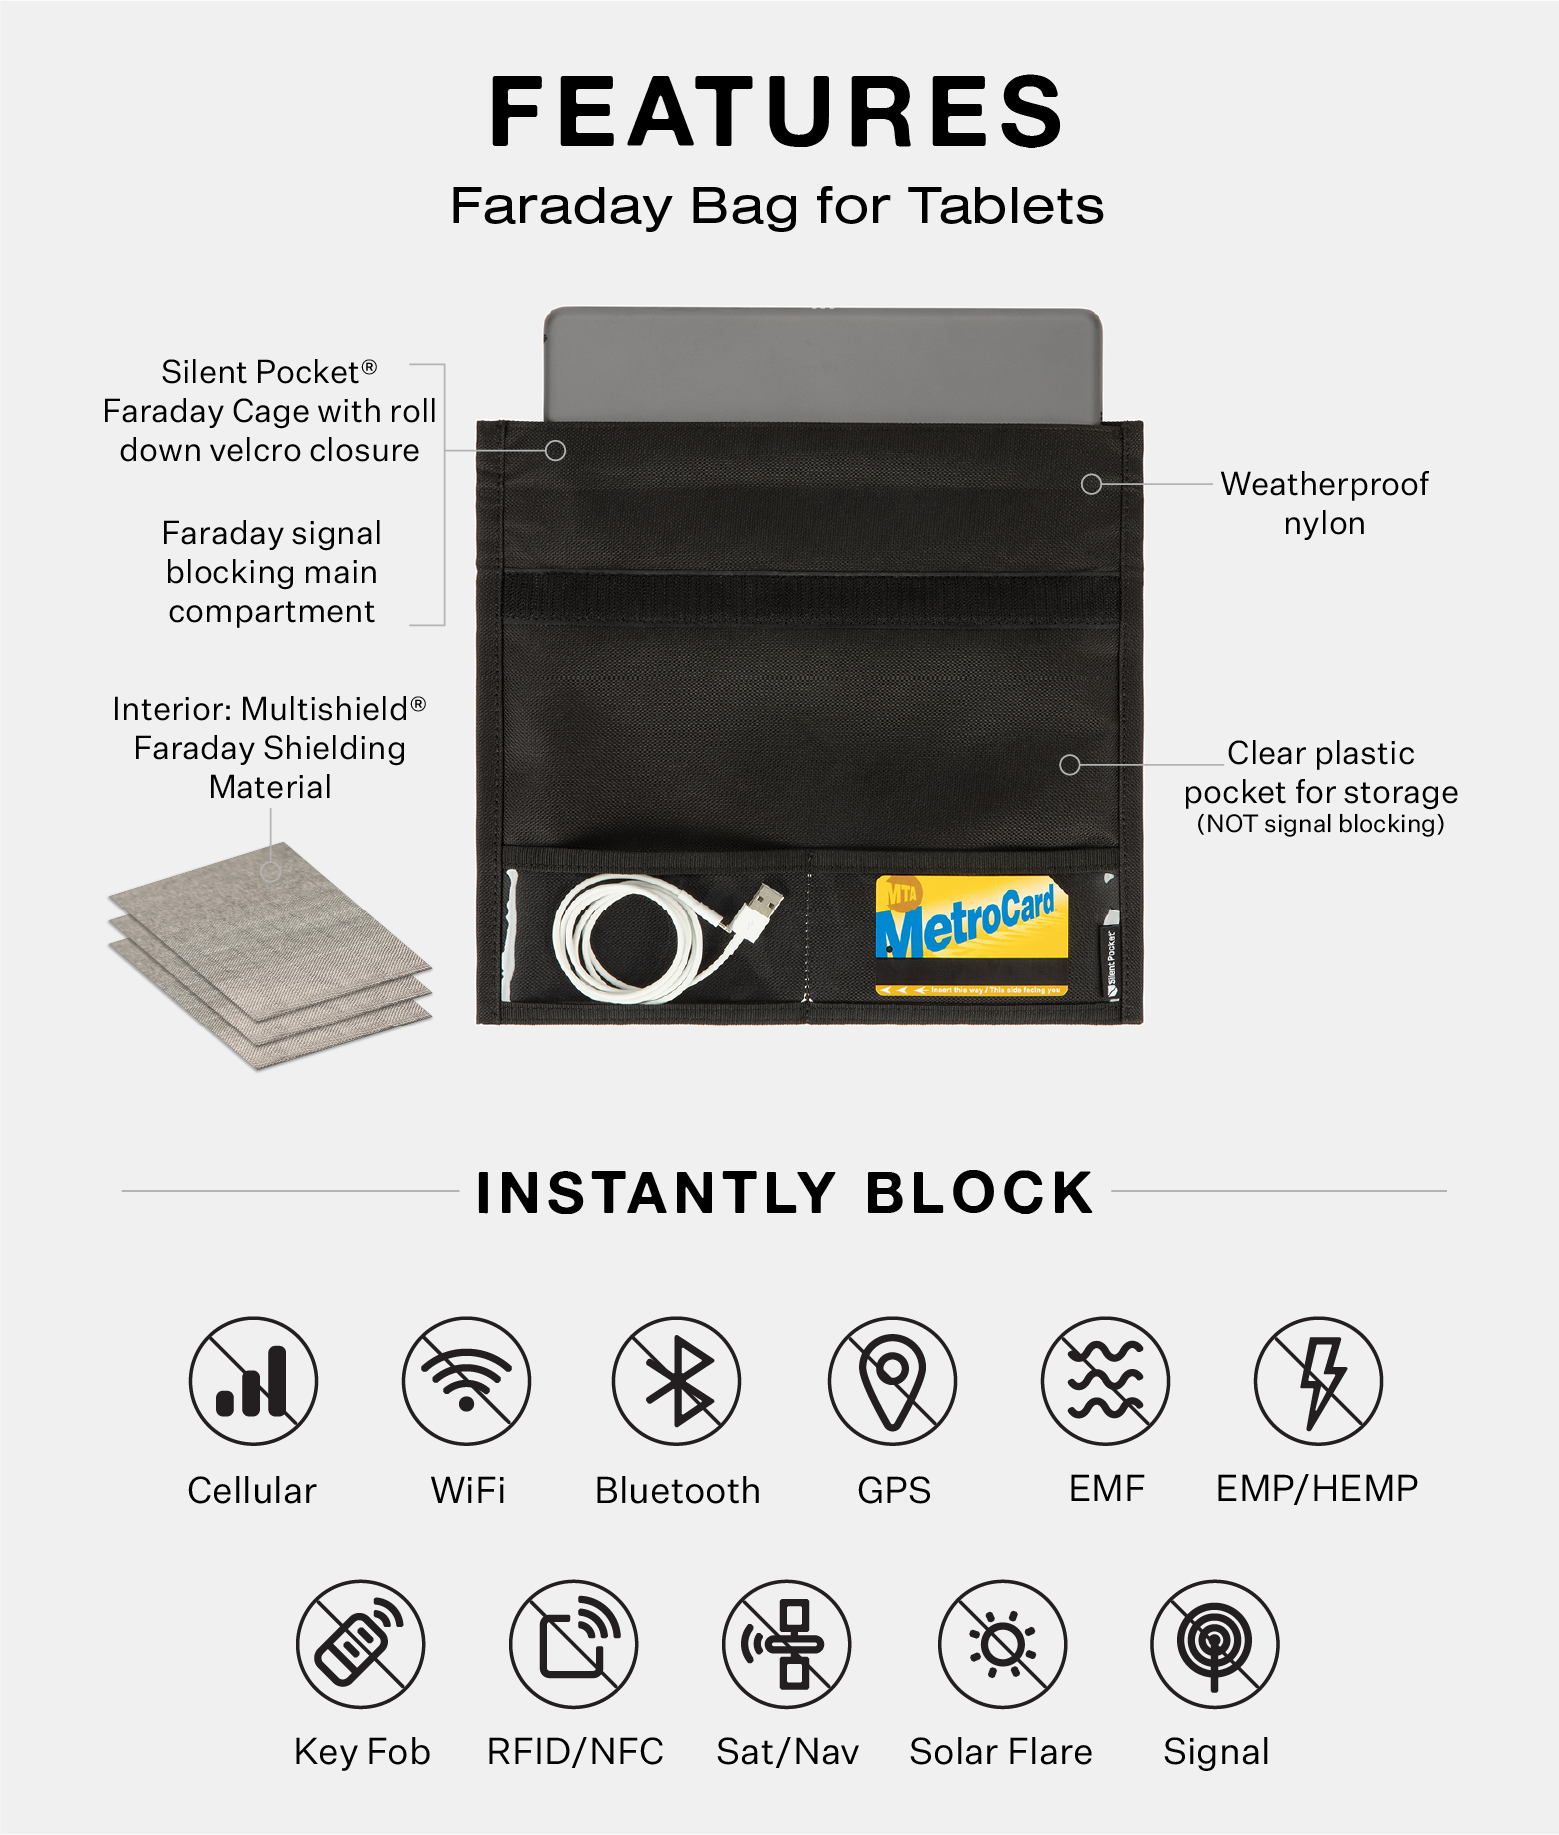 Faraday Phone Bag - SLNT®